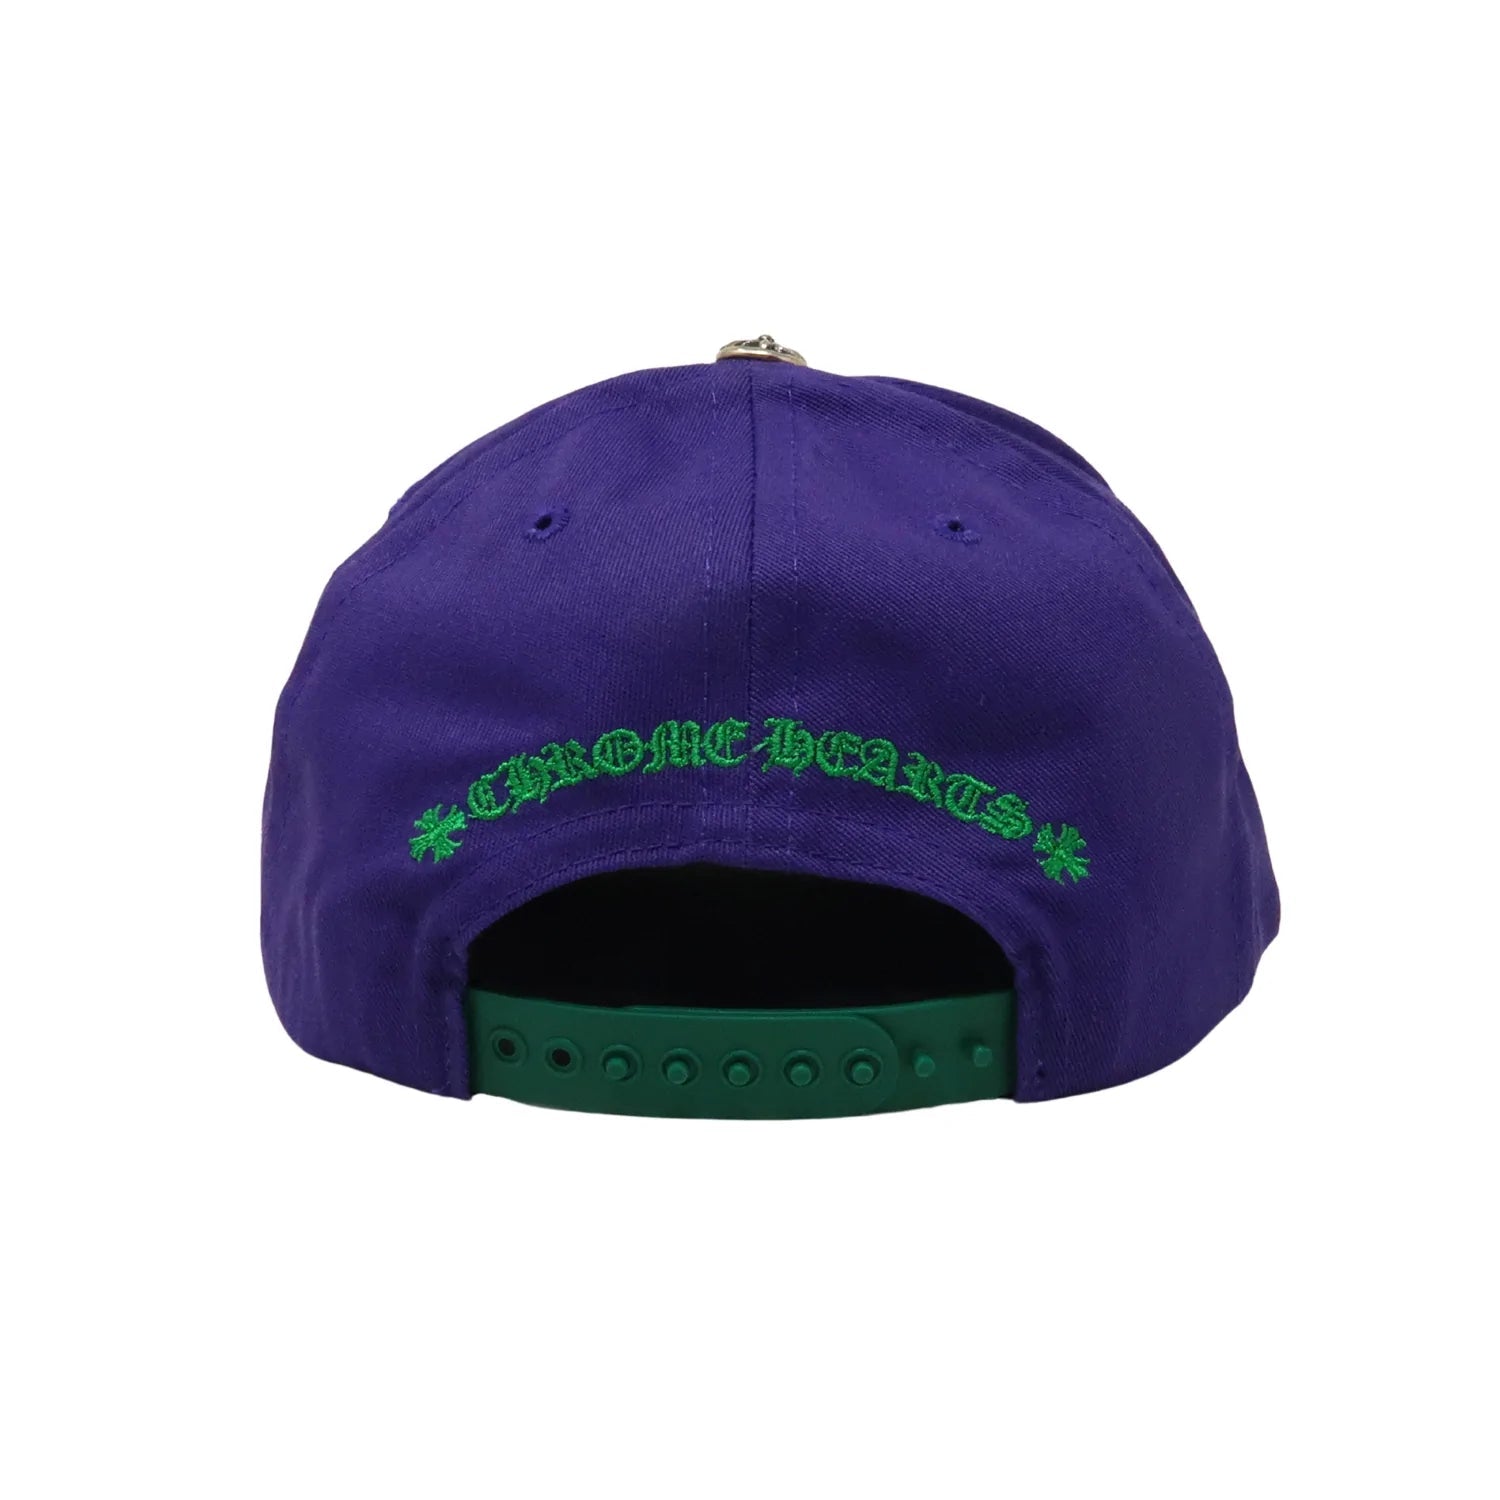 Chrome Hearts Baseball Cap Purple / Green - Paroissesaintefoy Sneakers Sale Online